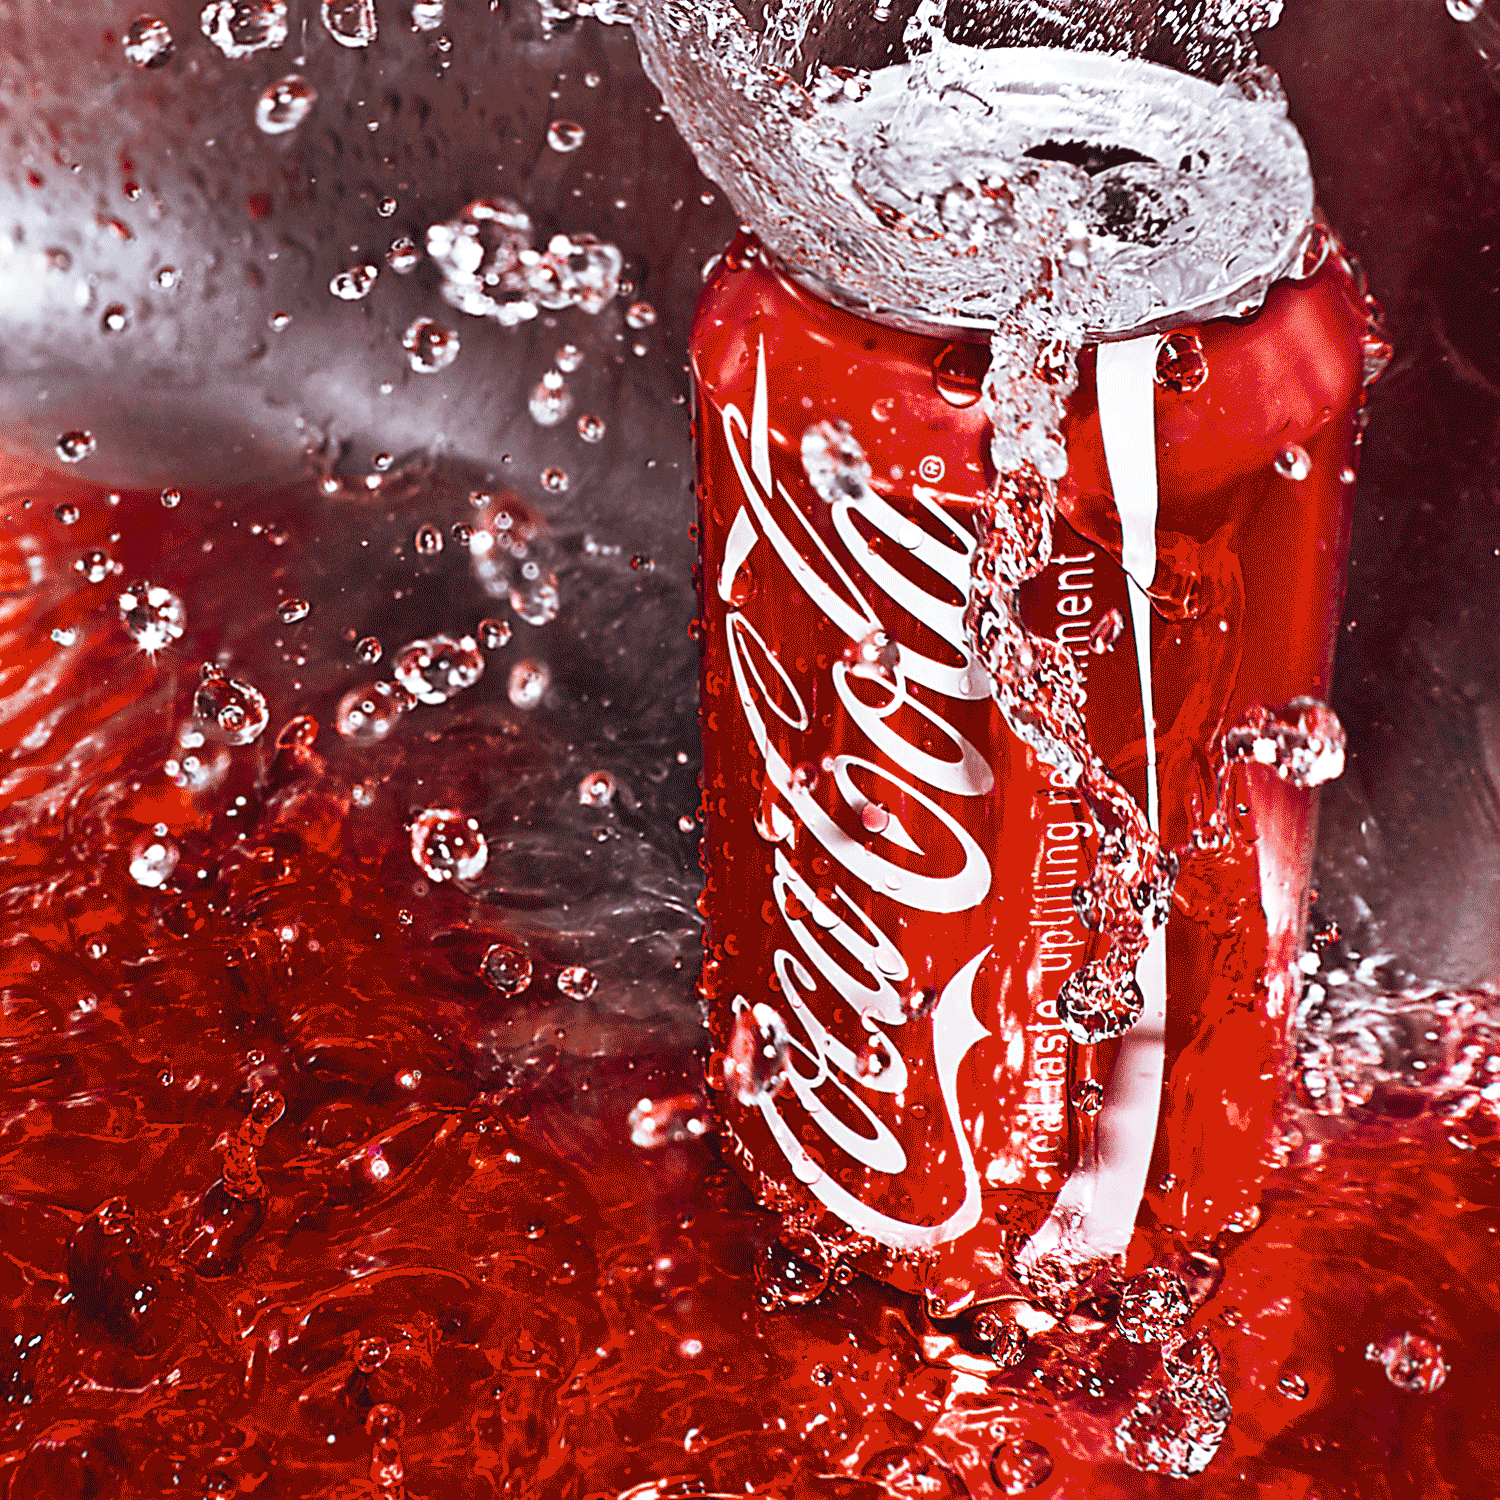 Coca Cola 2 on Pinterest | 947 Pins